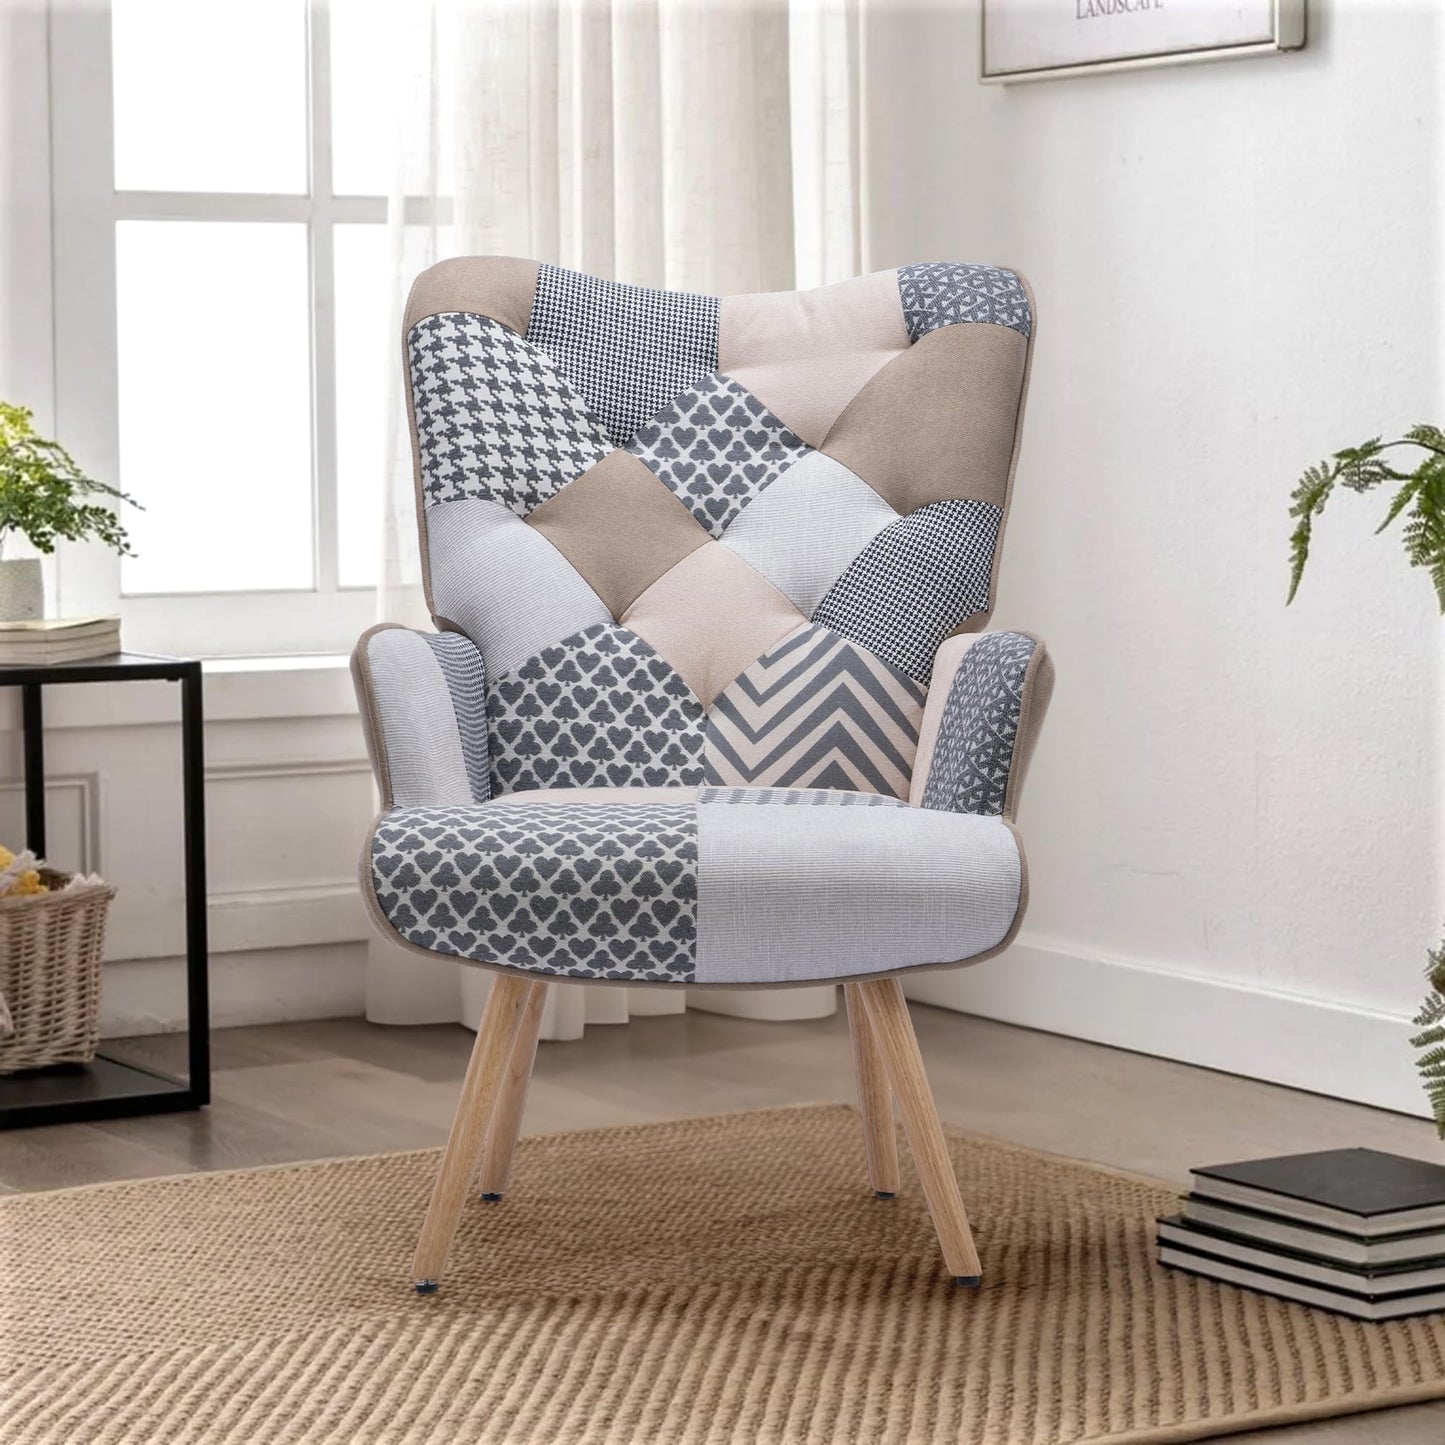 SumKea Patchwork Panache Upholstered Armchair Elegant, Cozy Accent Chair for Living Room, Bedroom, Office Decor, with Unique Multicolor Design, Grey Plaid